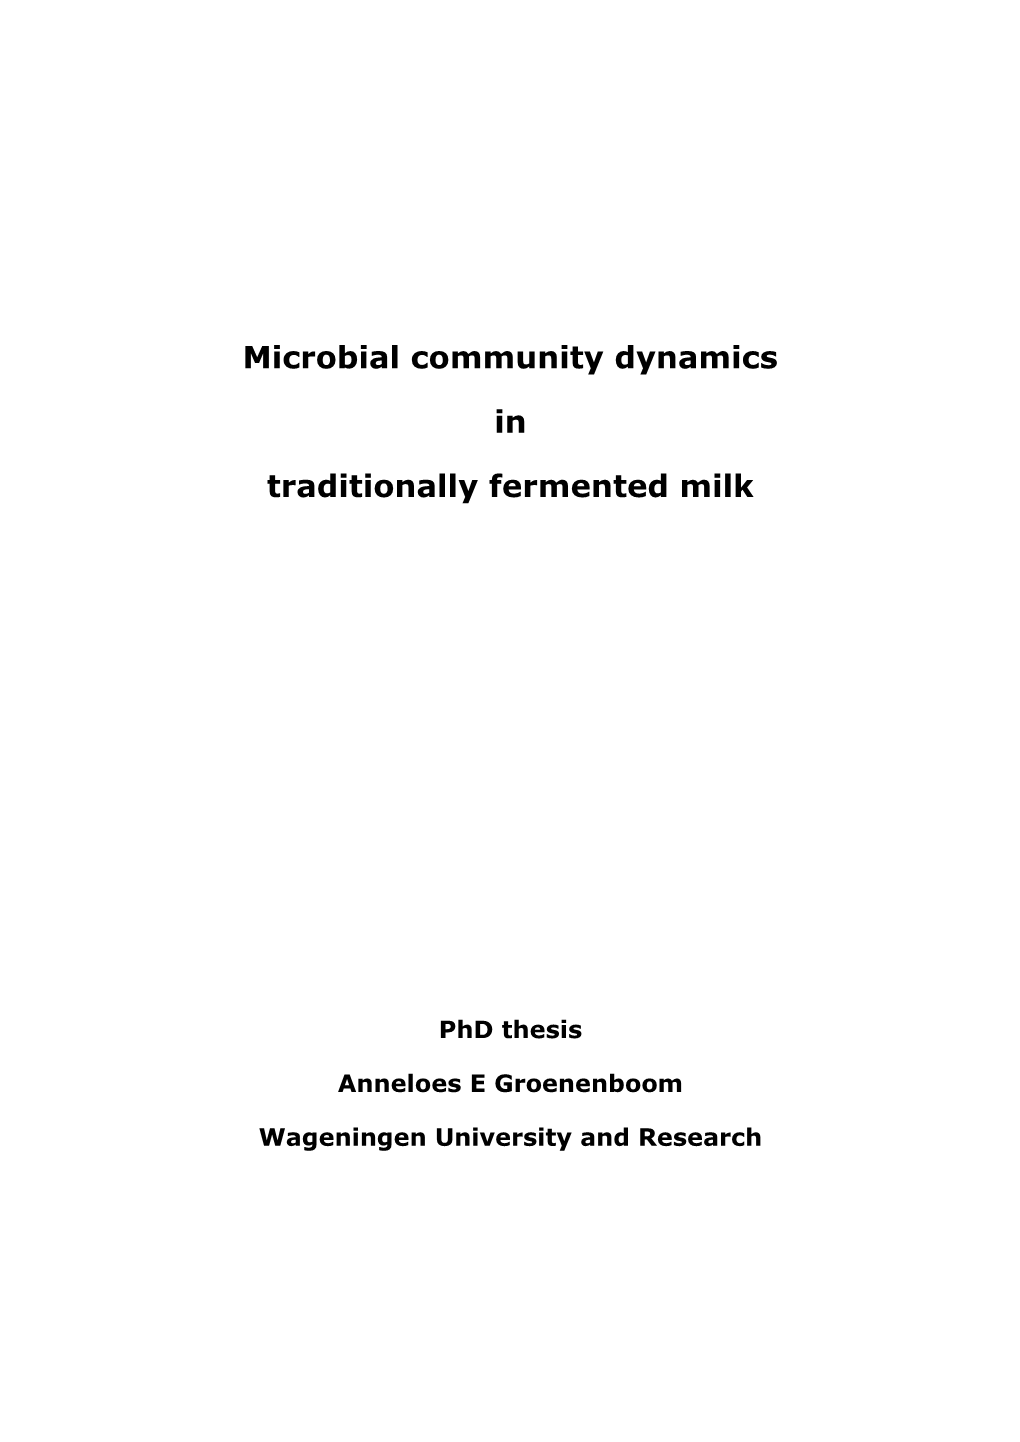 Microbial Community Dynamics In